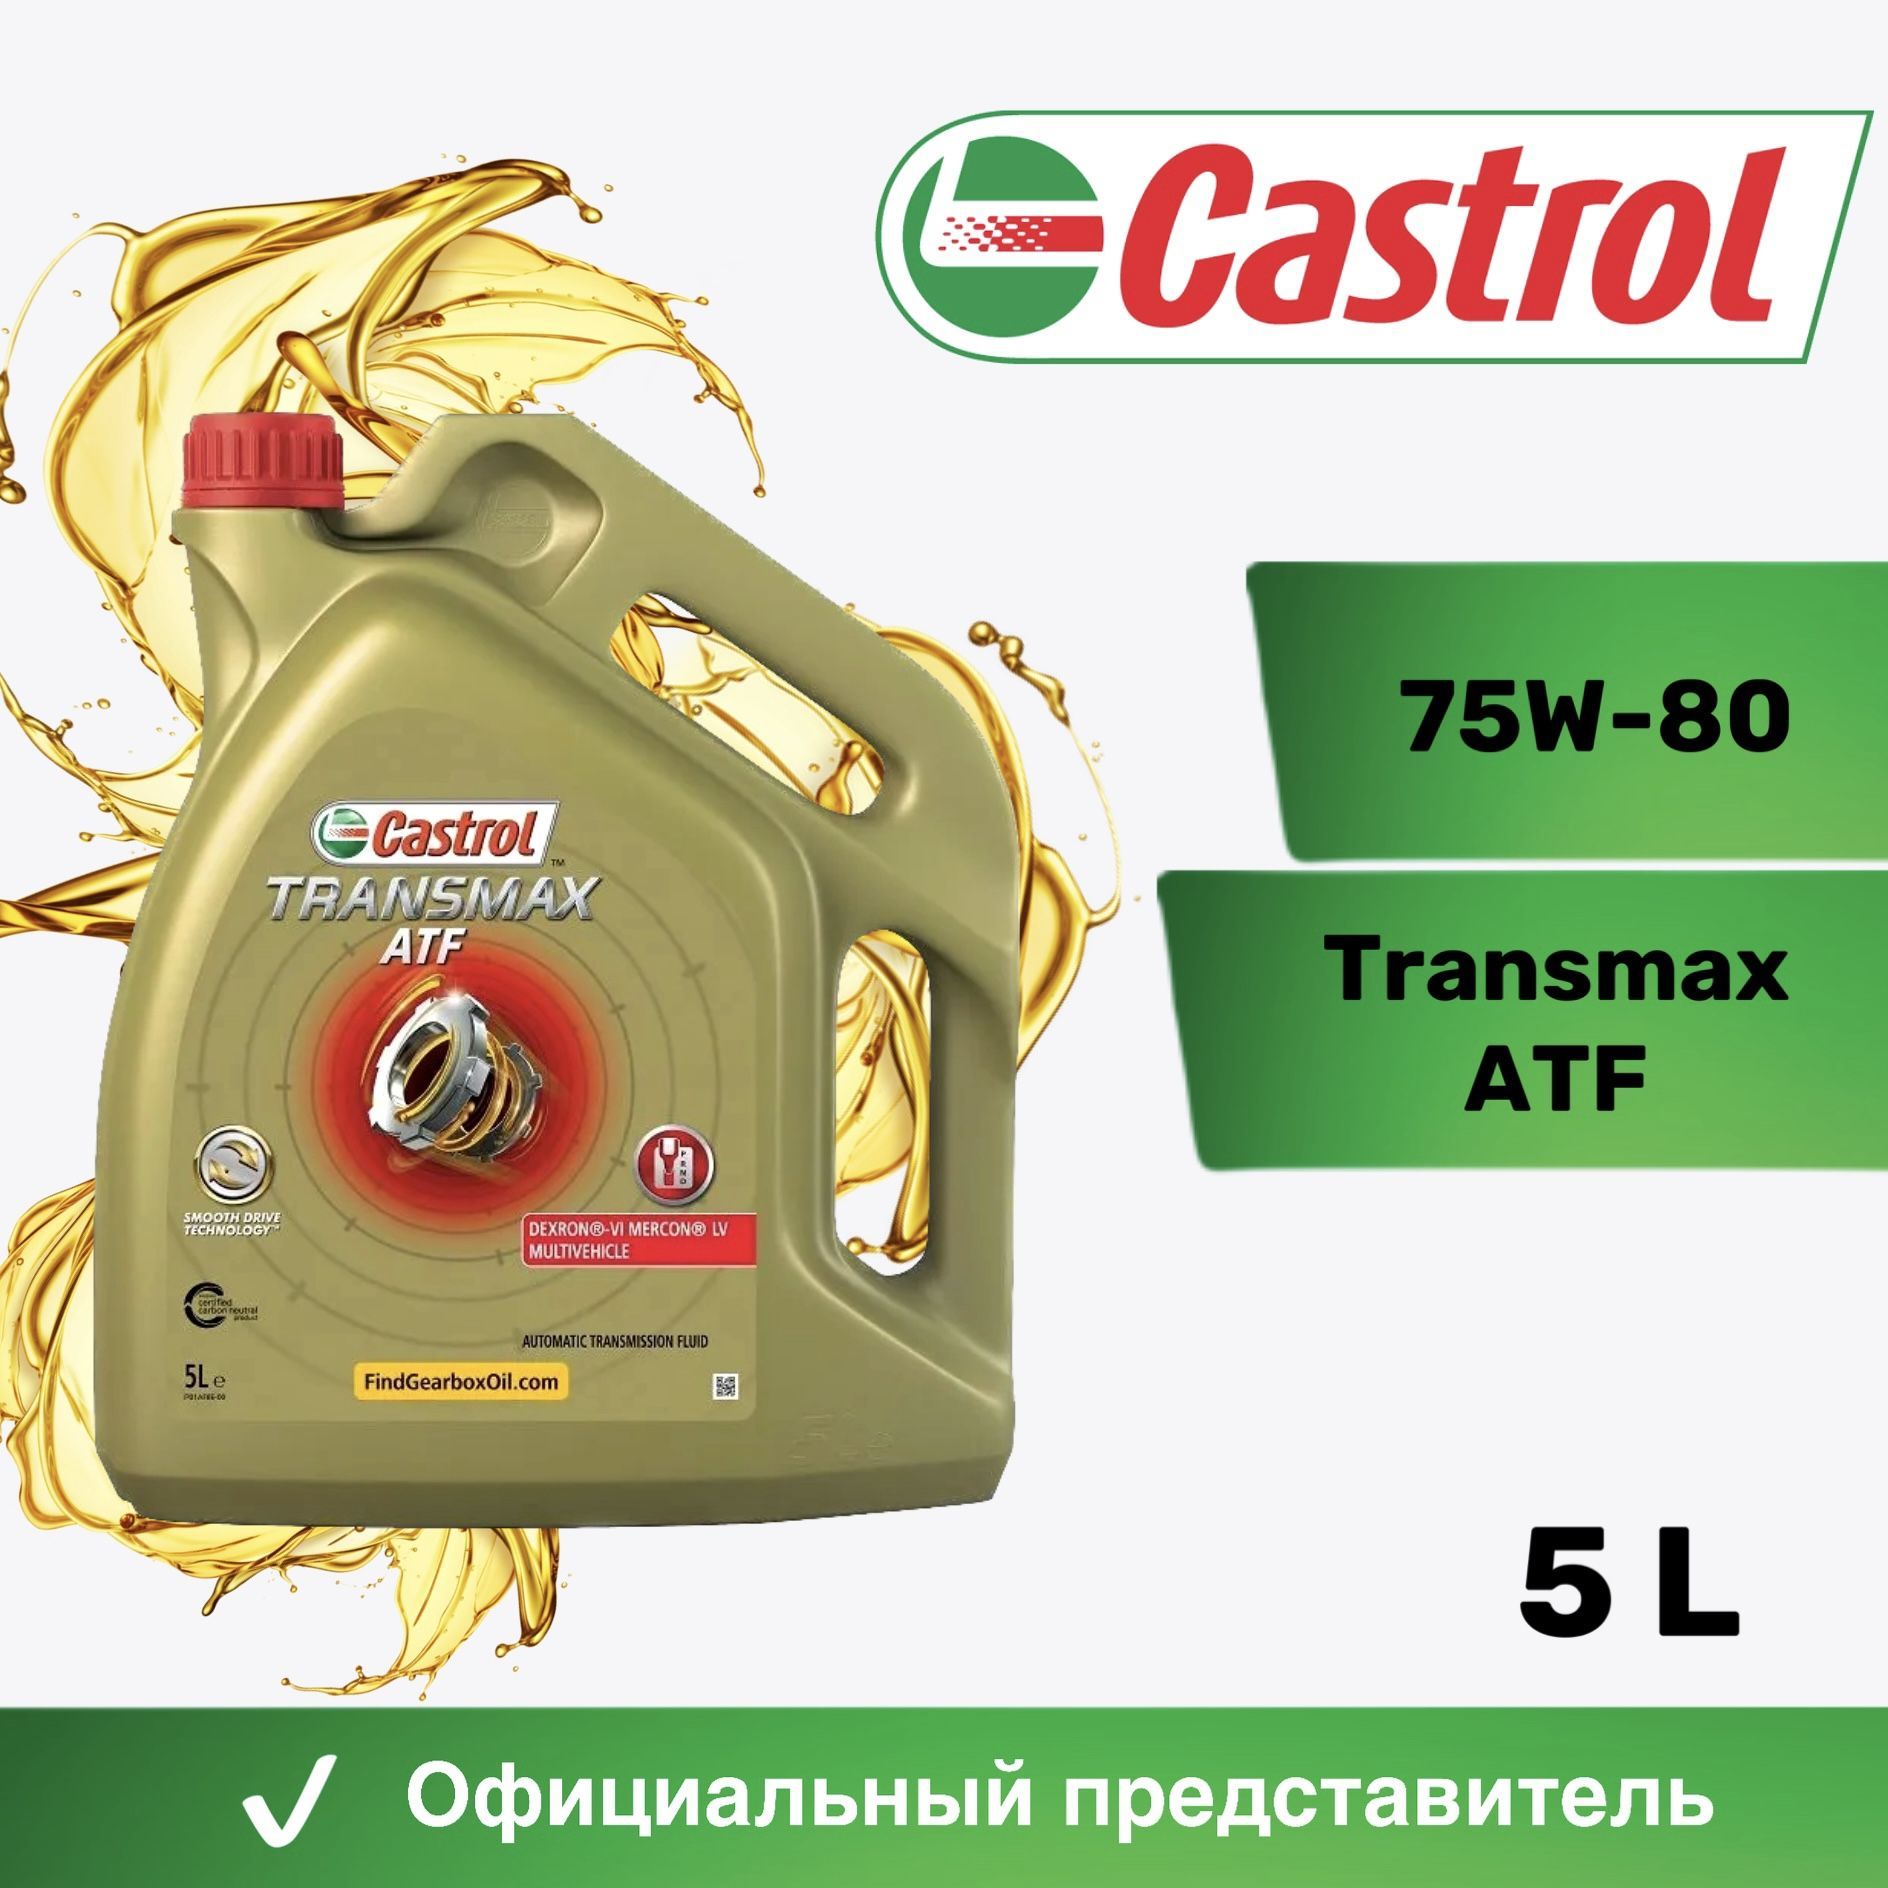 Castrol transmax atf. Castrol Transmax Universal 75w-90. Трансмиссионное масло Castrol Transmax z ATF.